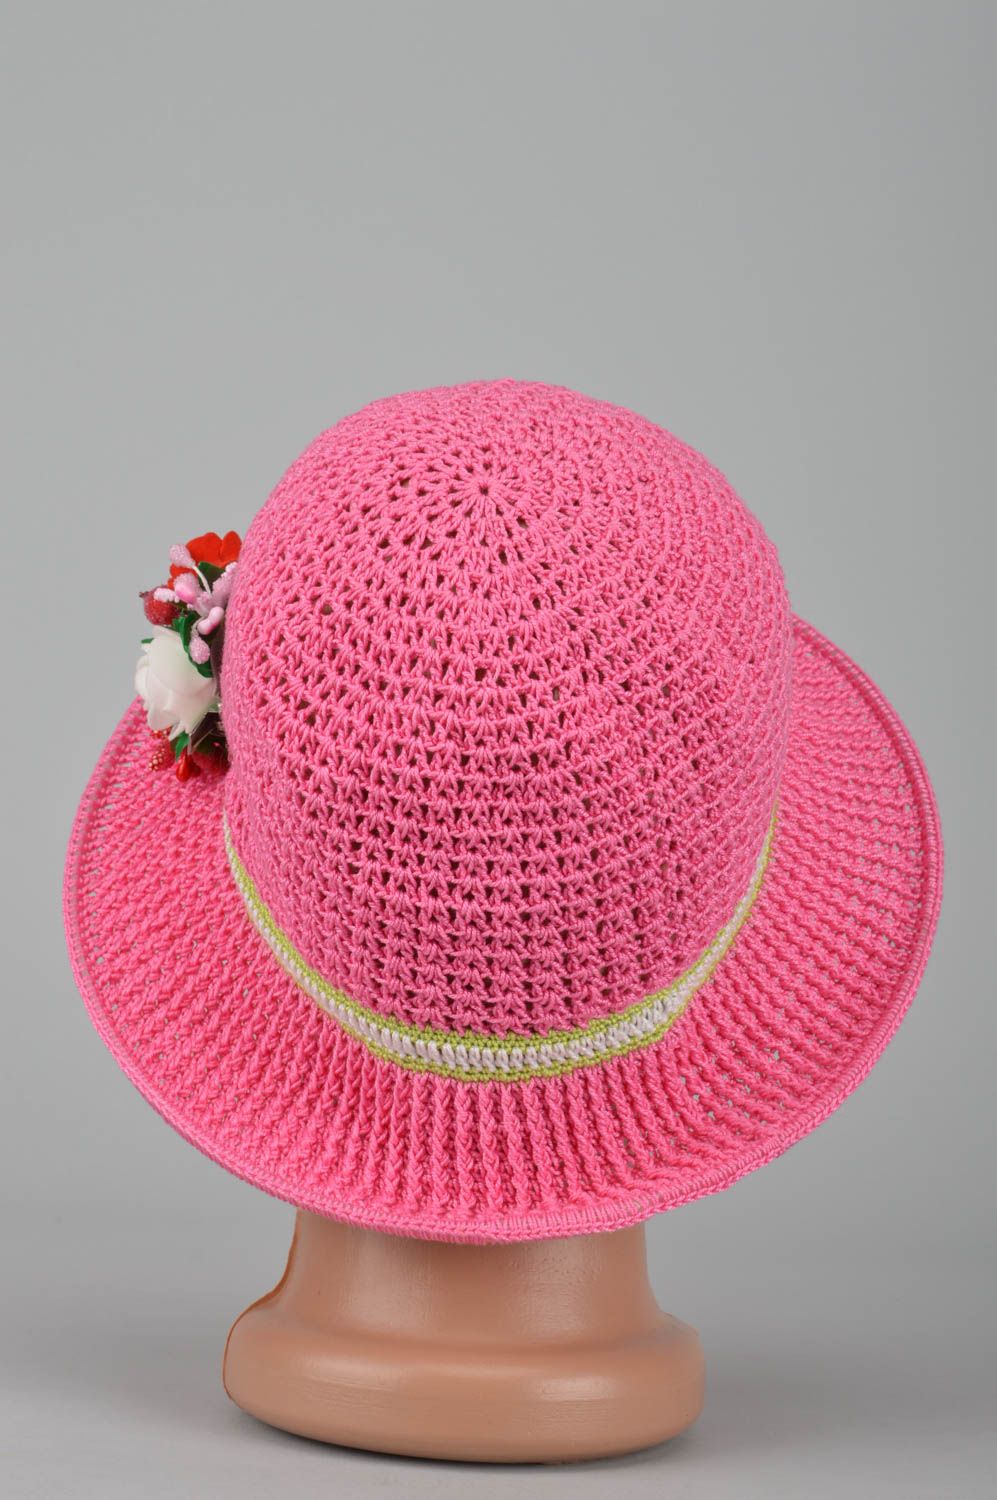 Beautiful handmade crochet hat fashion accessories cute hats crochet ideas photo 5